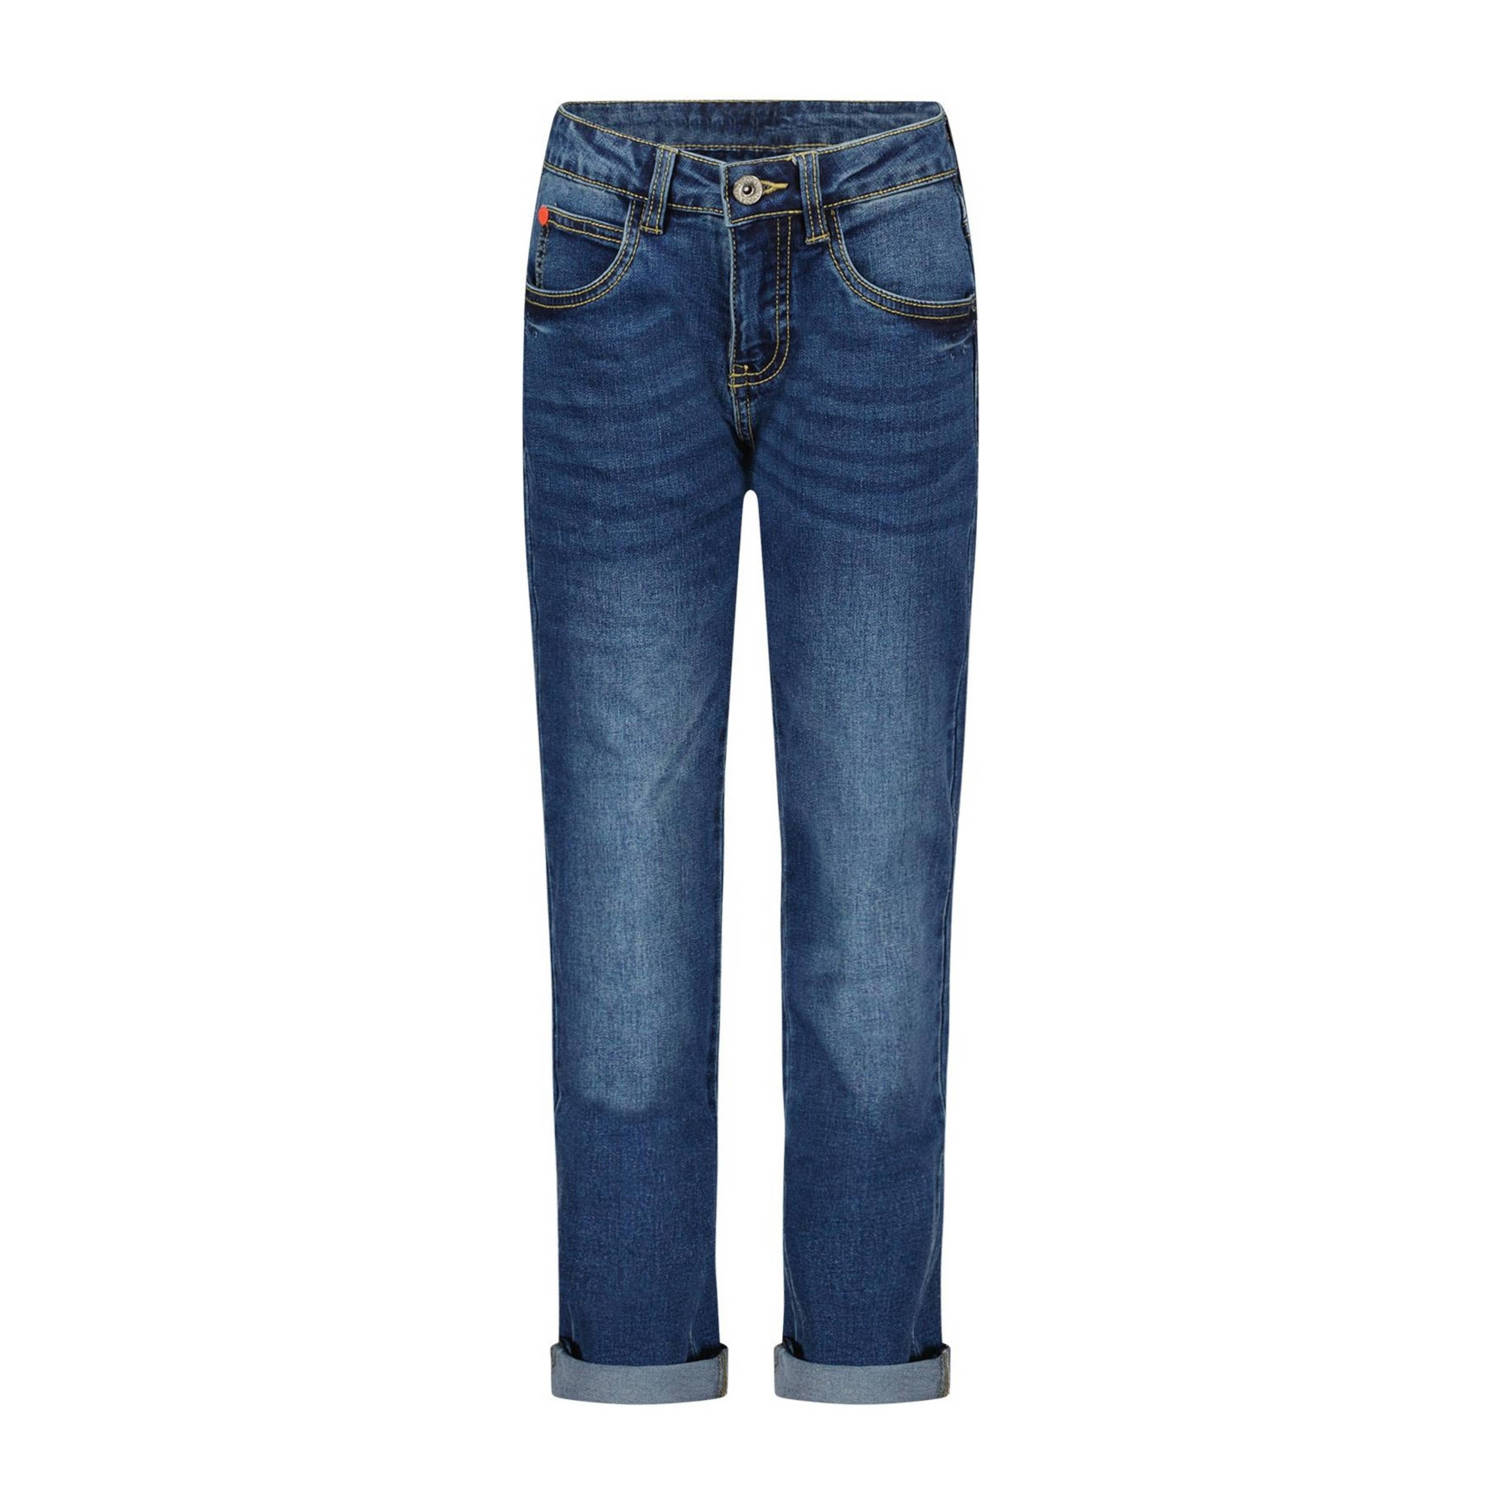 TYGO & vito straight fit jeans Boaz medium blue denim Blauw Jongens Katoen 104